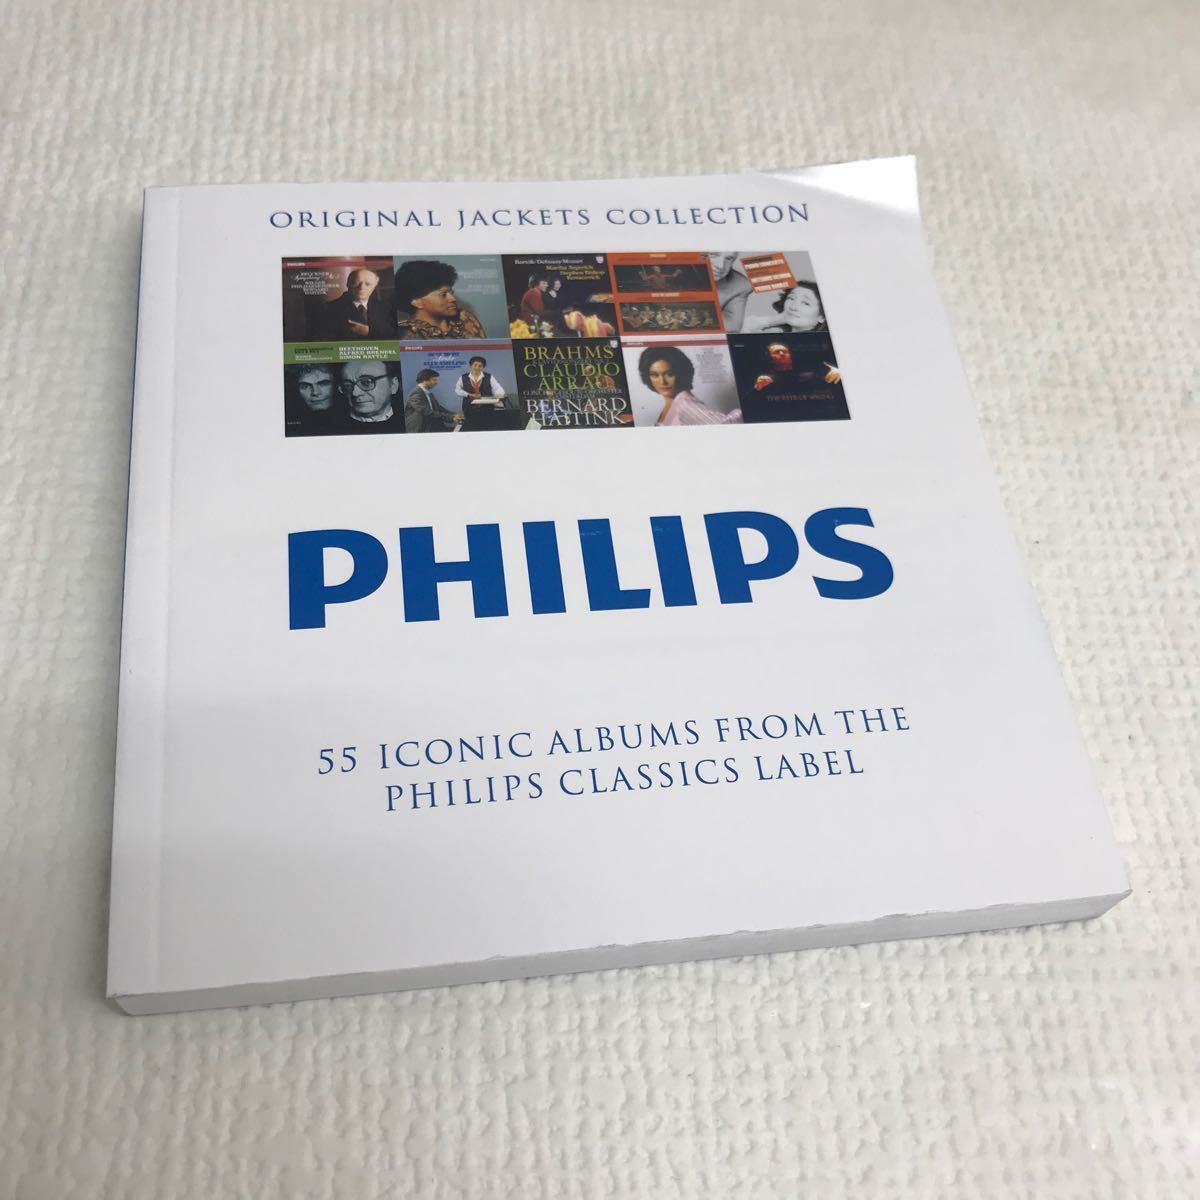 I1229A5 フィリップス・オリジナル・ジャケット・コレクション CD 55枚組 クラシック 輸入盤 PHILIPS ORIGINAL JACKETS COLLECTION _画像6